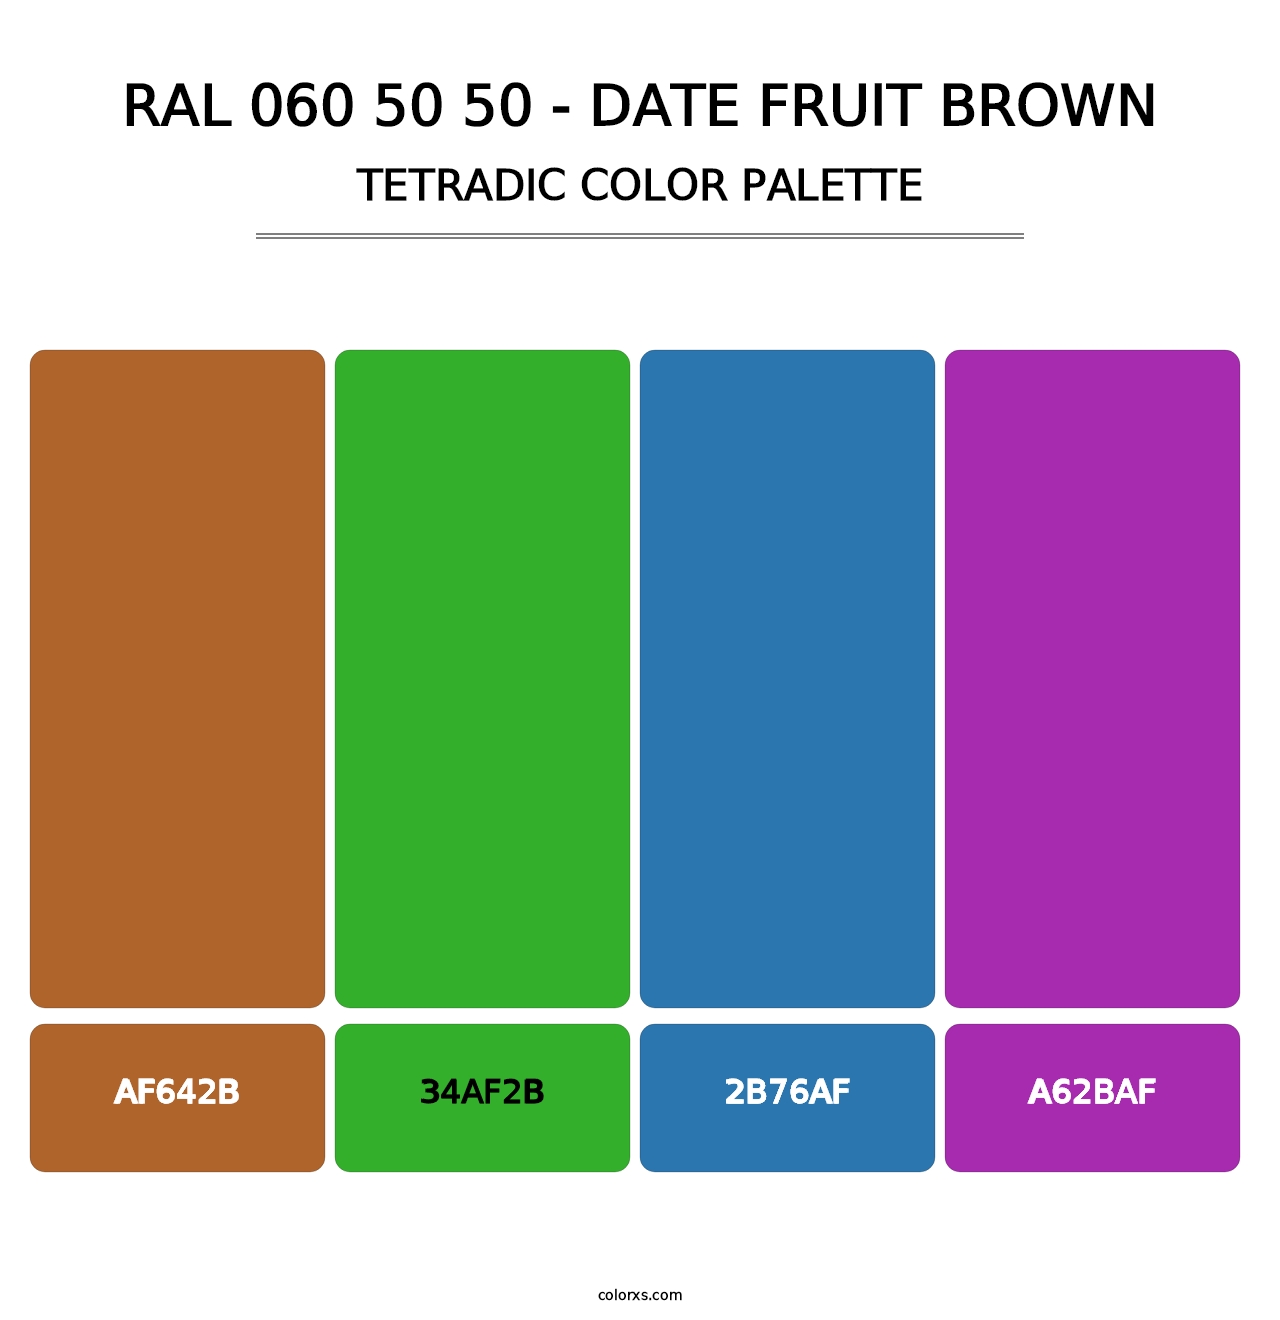 RAL 060 50 50 - Date Fruit Brown - Tetradic Color Palette